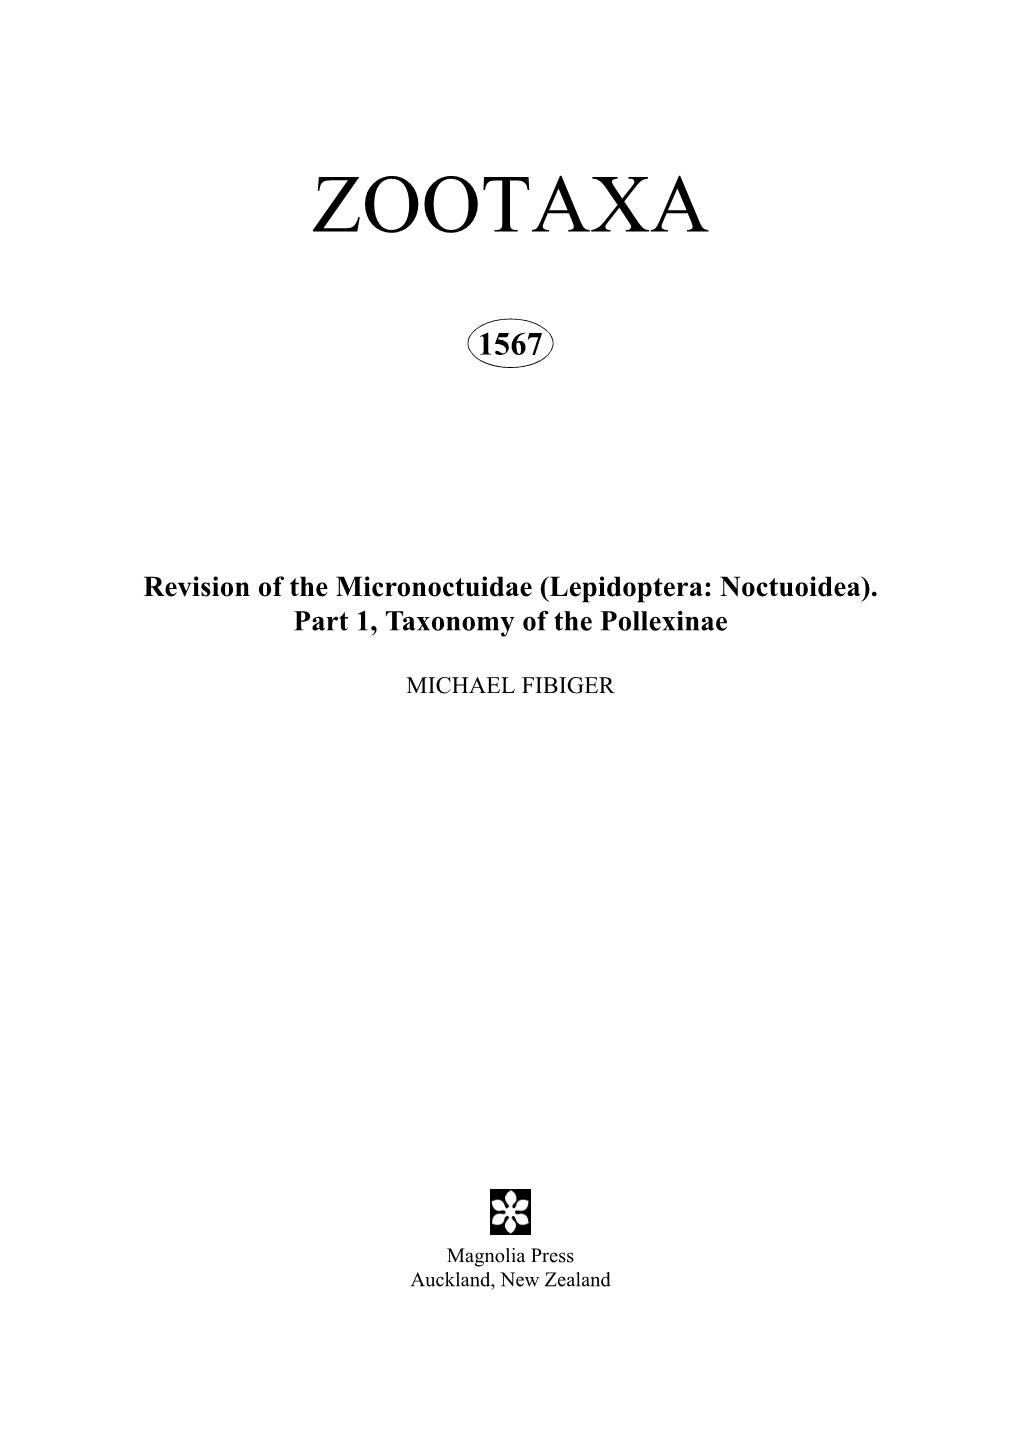 Zootaxa,Revision of the Micronoctuidae